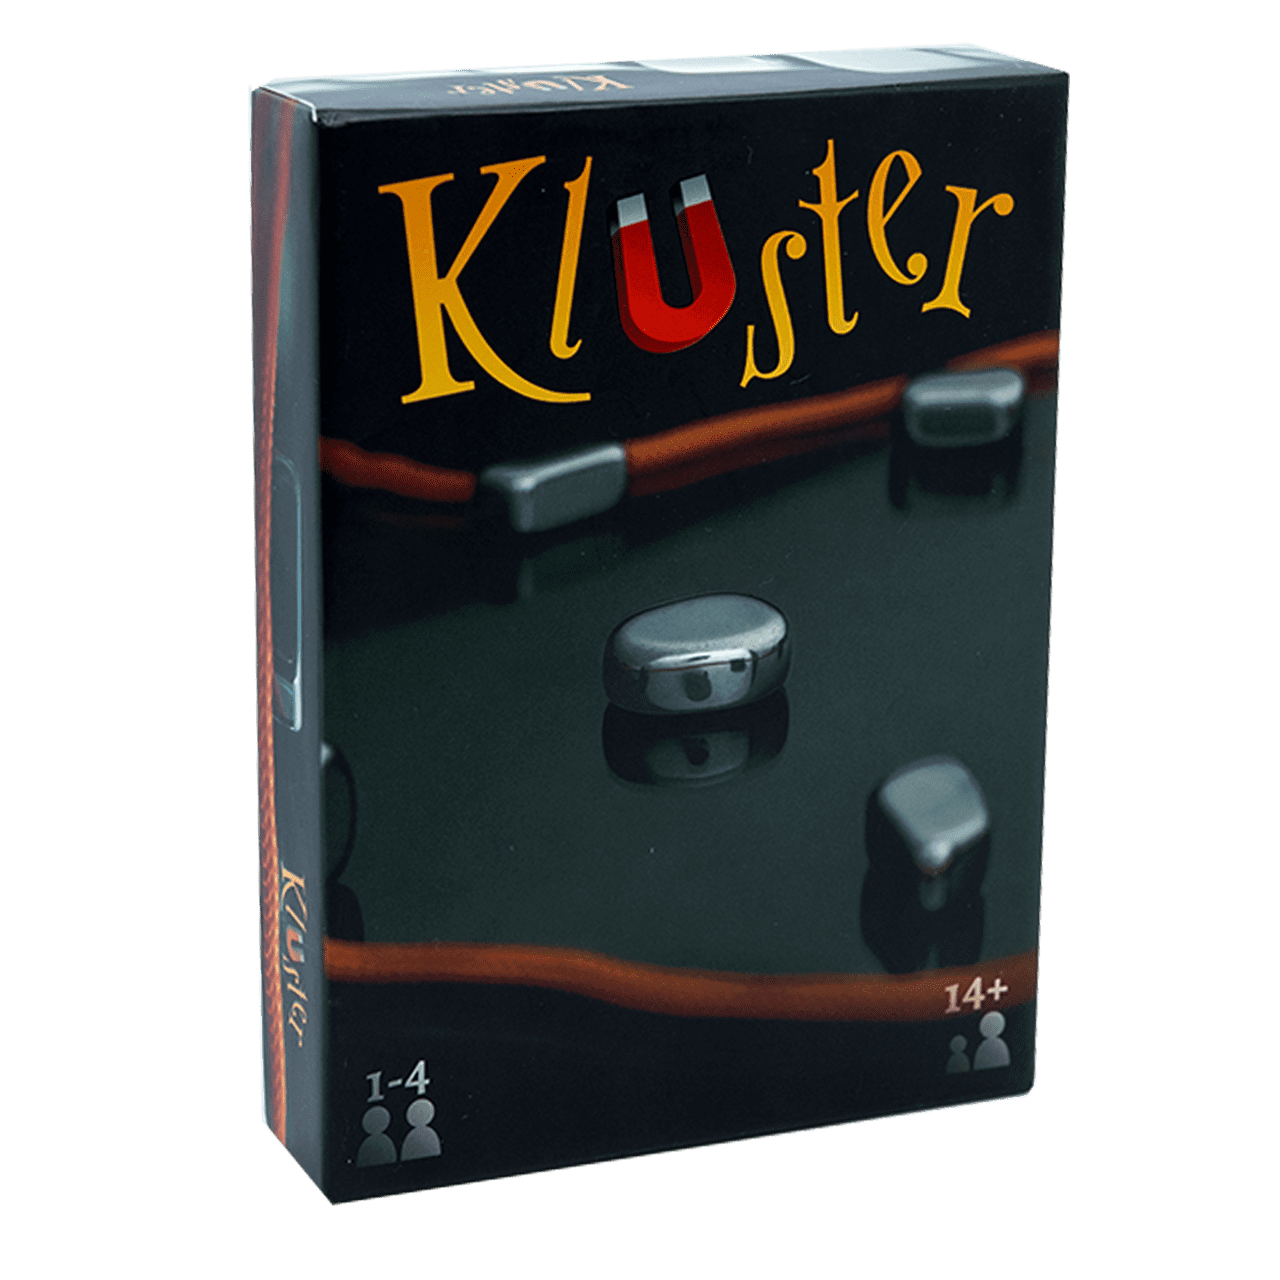  Kluster, Fun Table Top Magnet Game